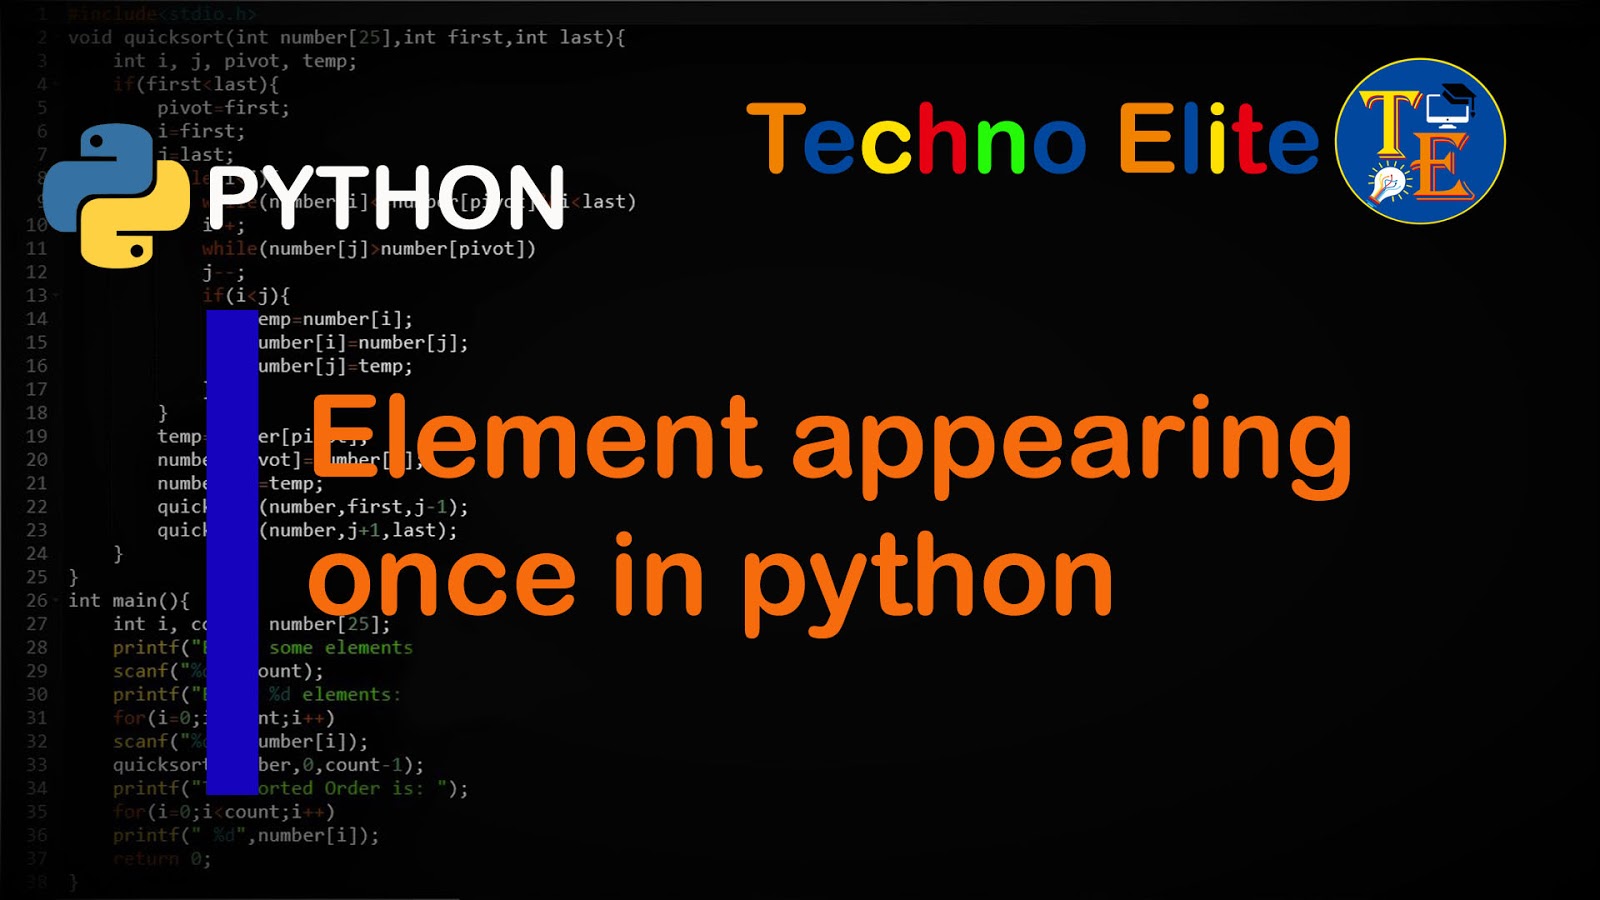 Find elements python. Python Elementary. Elem Python. Upper in Python for elements of list. Python Elem что означает.